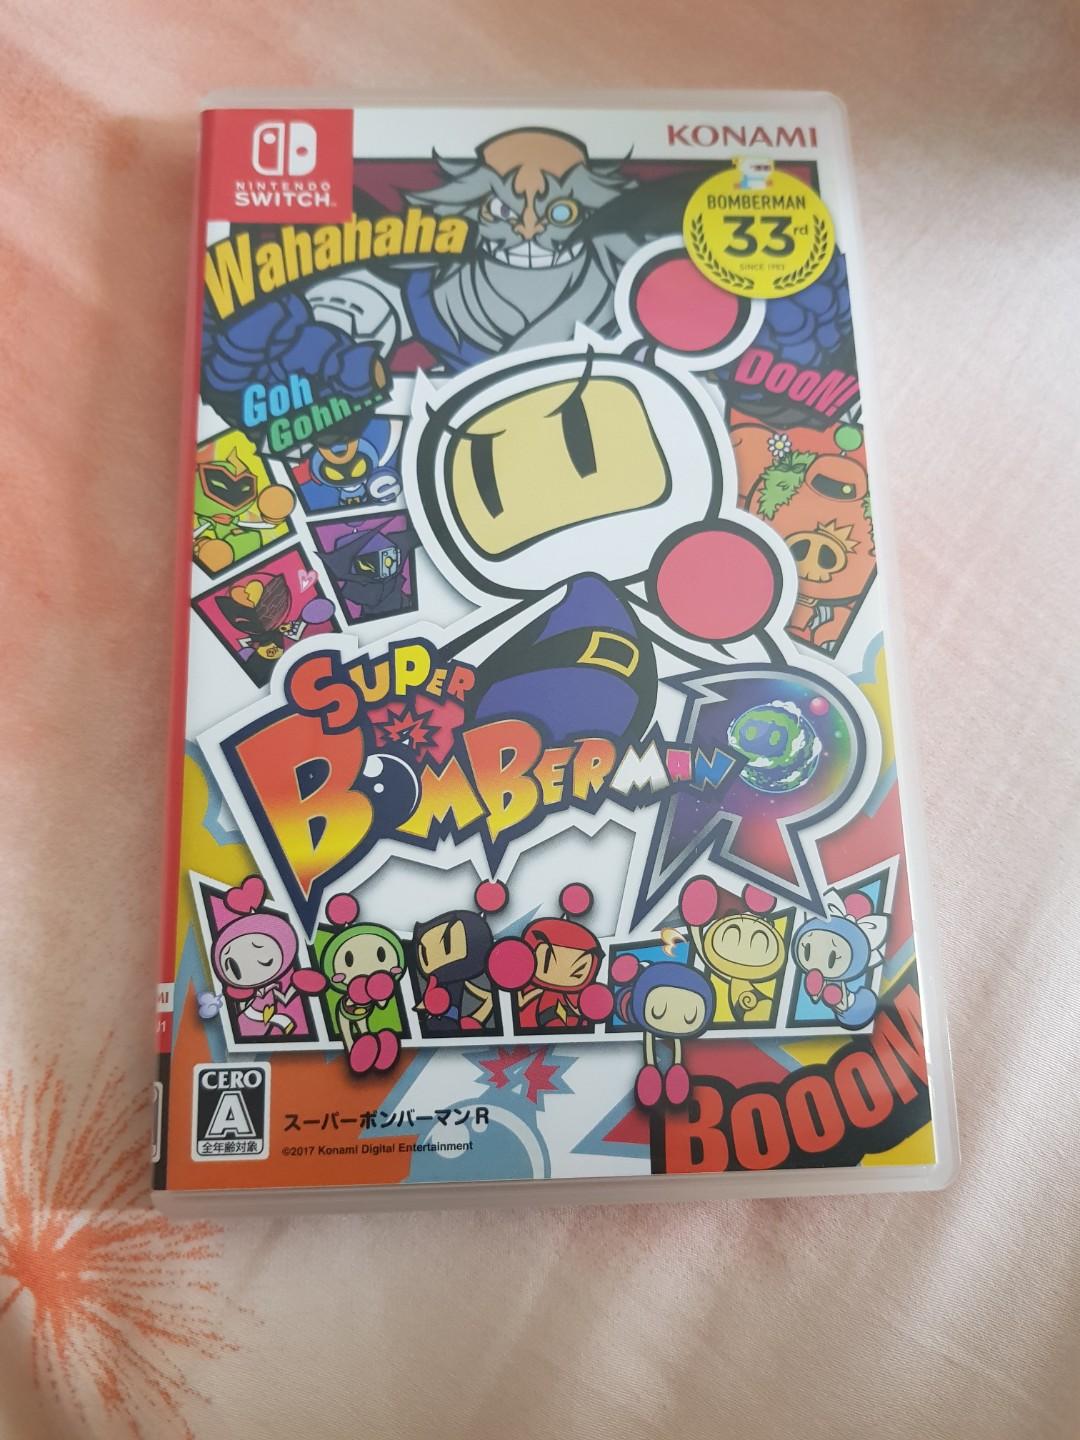 Super Bomberman R2 #nintendo #nintendoswitch #videogames